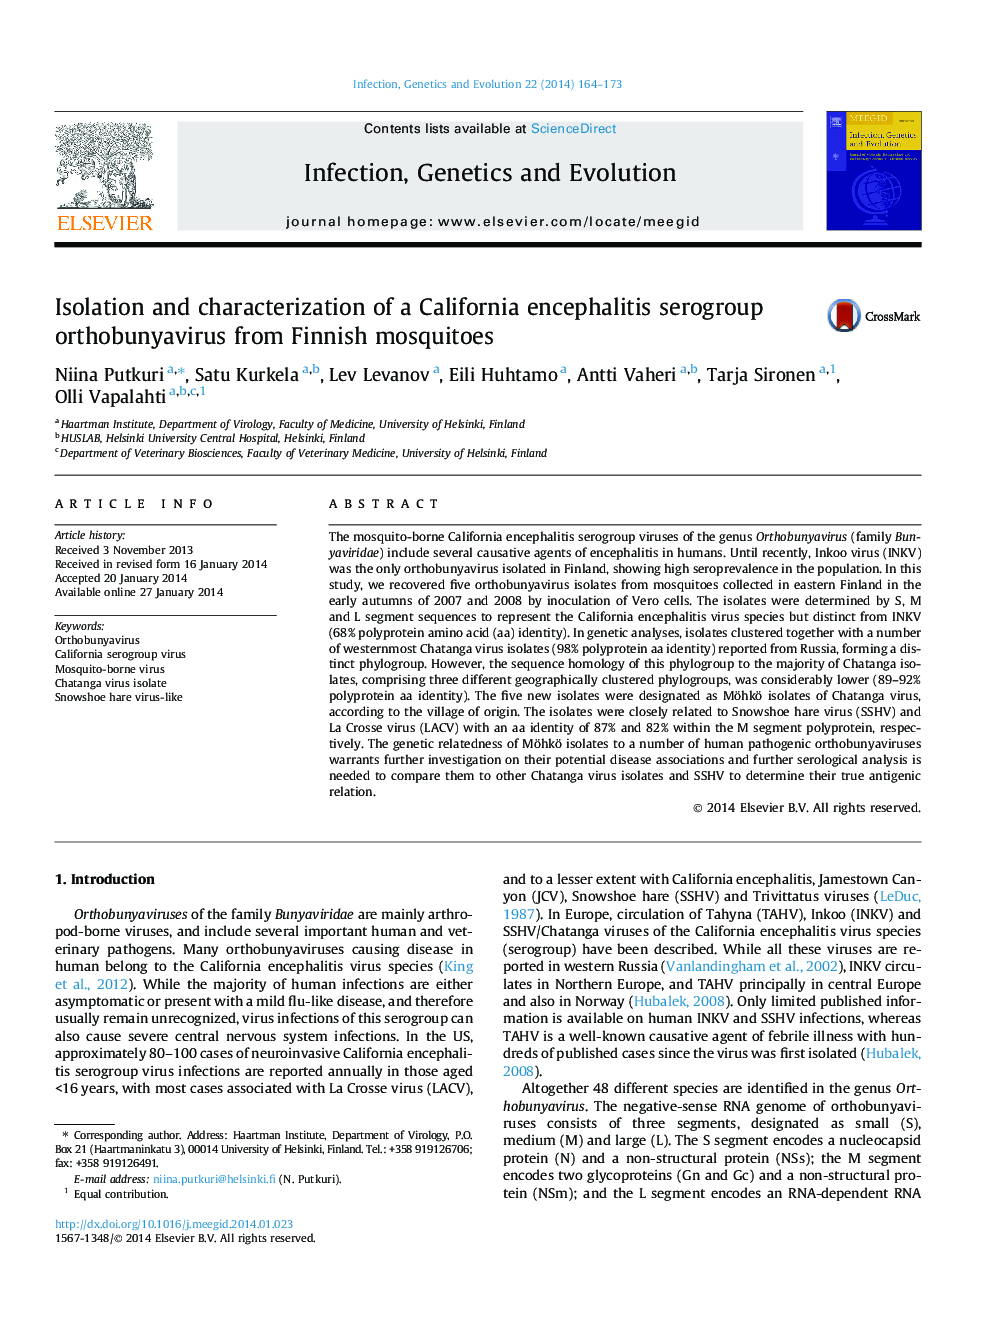 Isolation and characterization of a California encephalitis serogroup orthobunyavirus from Finnish mosquitoes